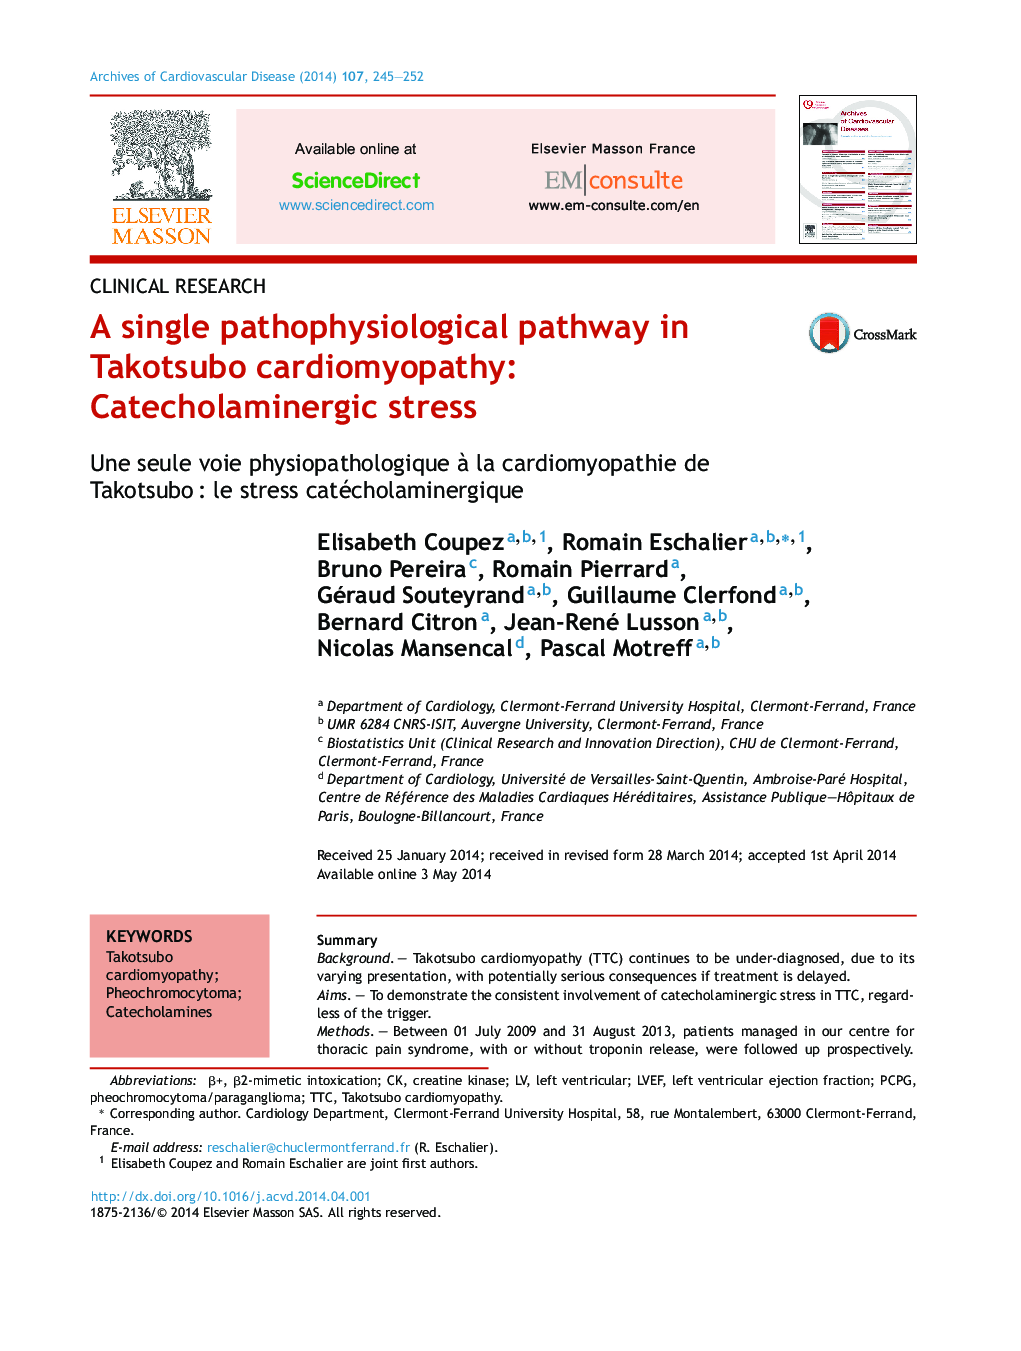 A single pathophysiological pathway in Takotsubo cardiomyopathy: Catecholaminergic stress